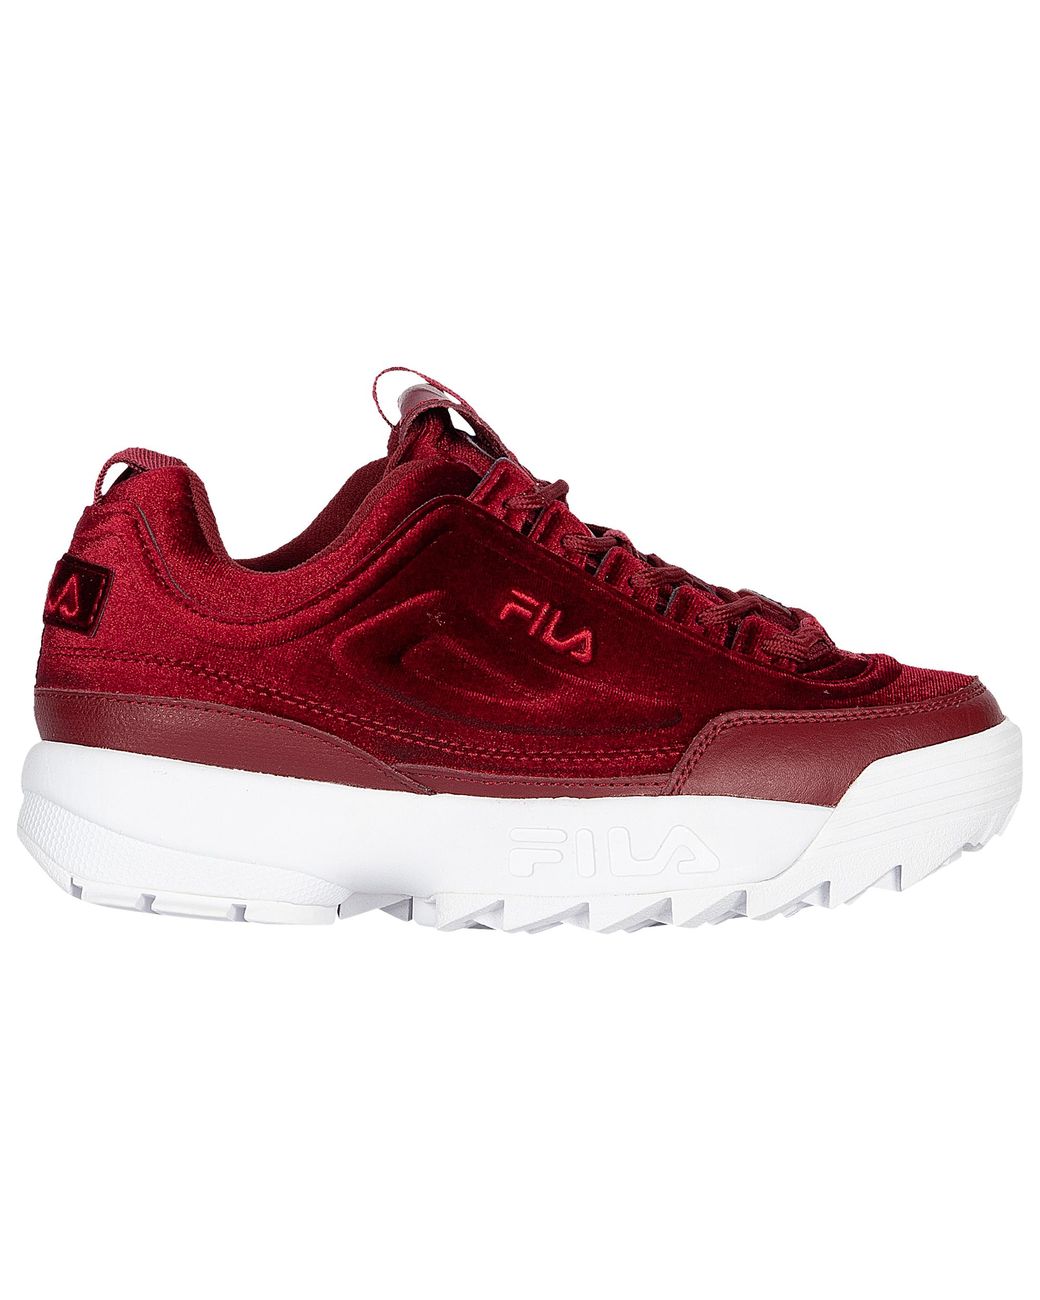 Fila Disruptor Velvet Training Shoes in Maroon (Red) | Lyst